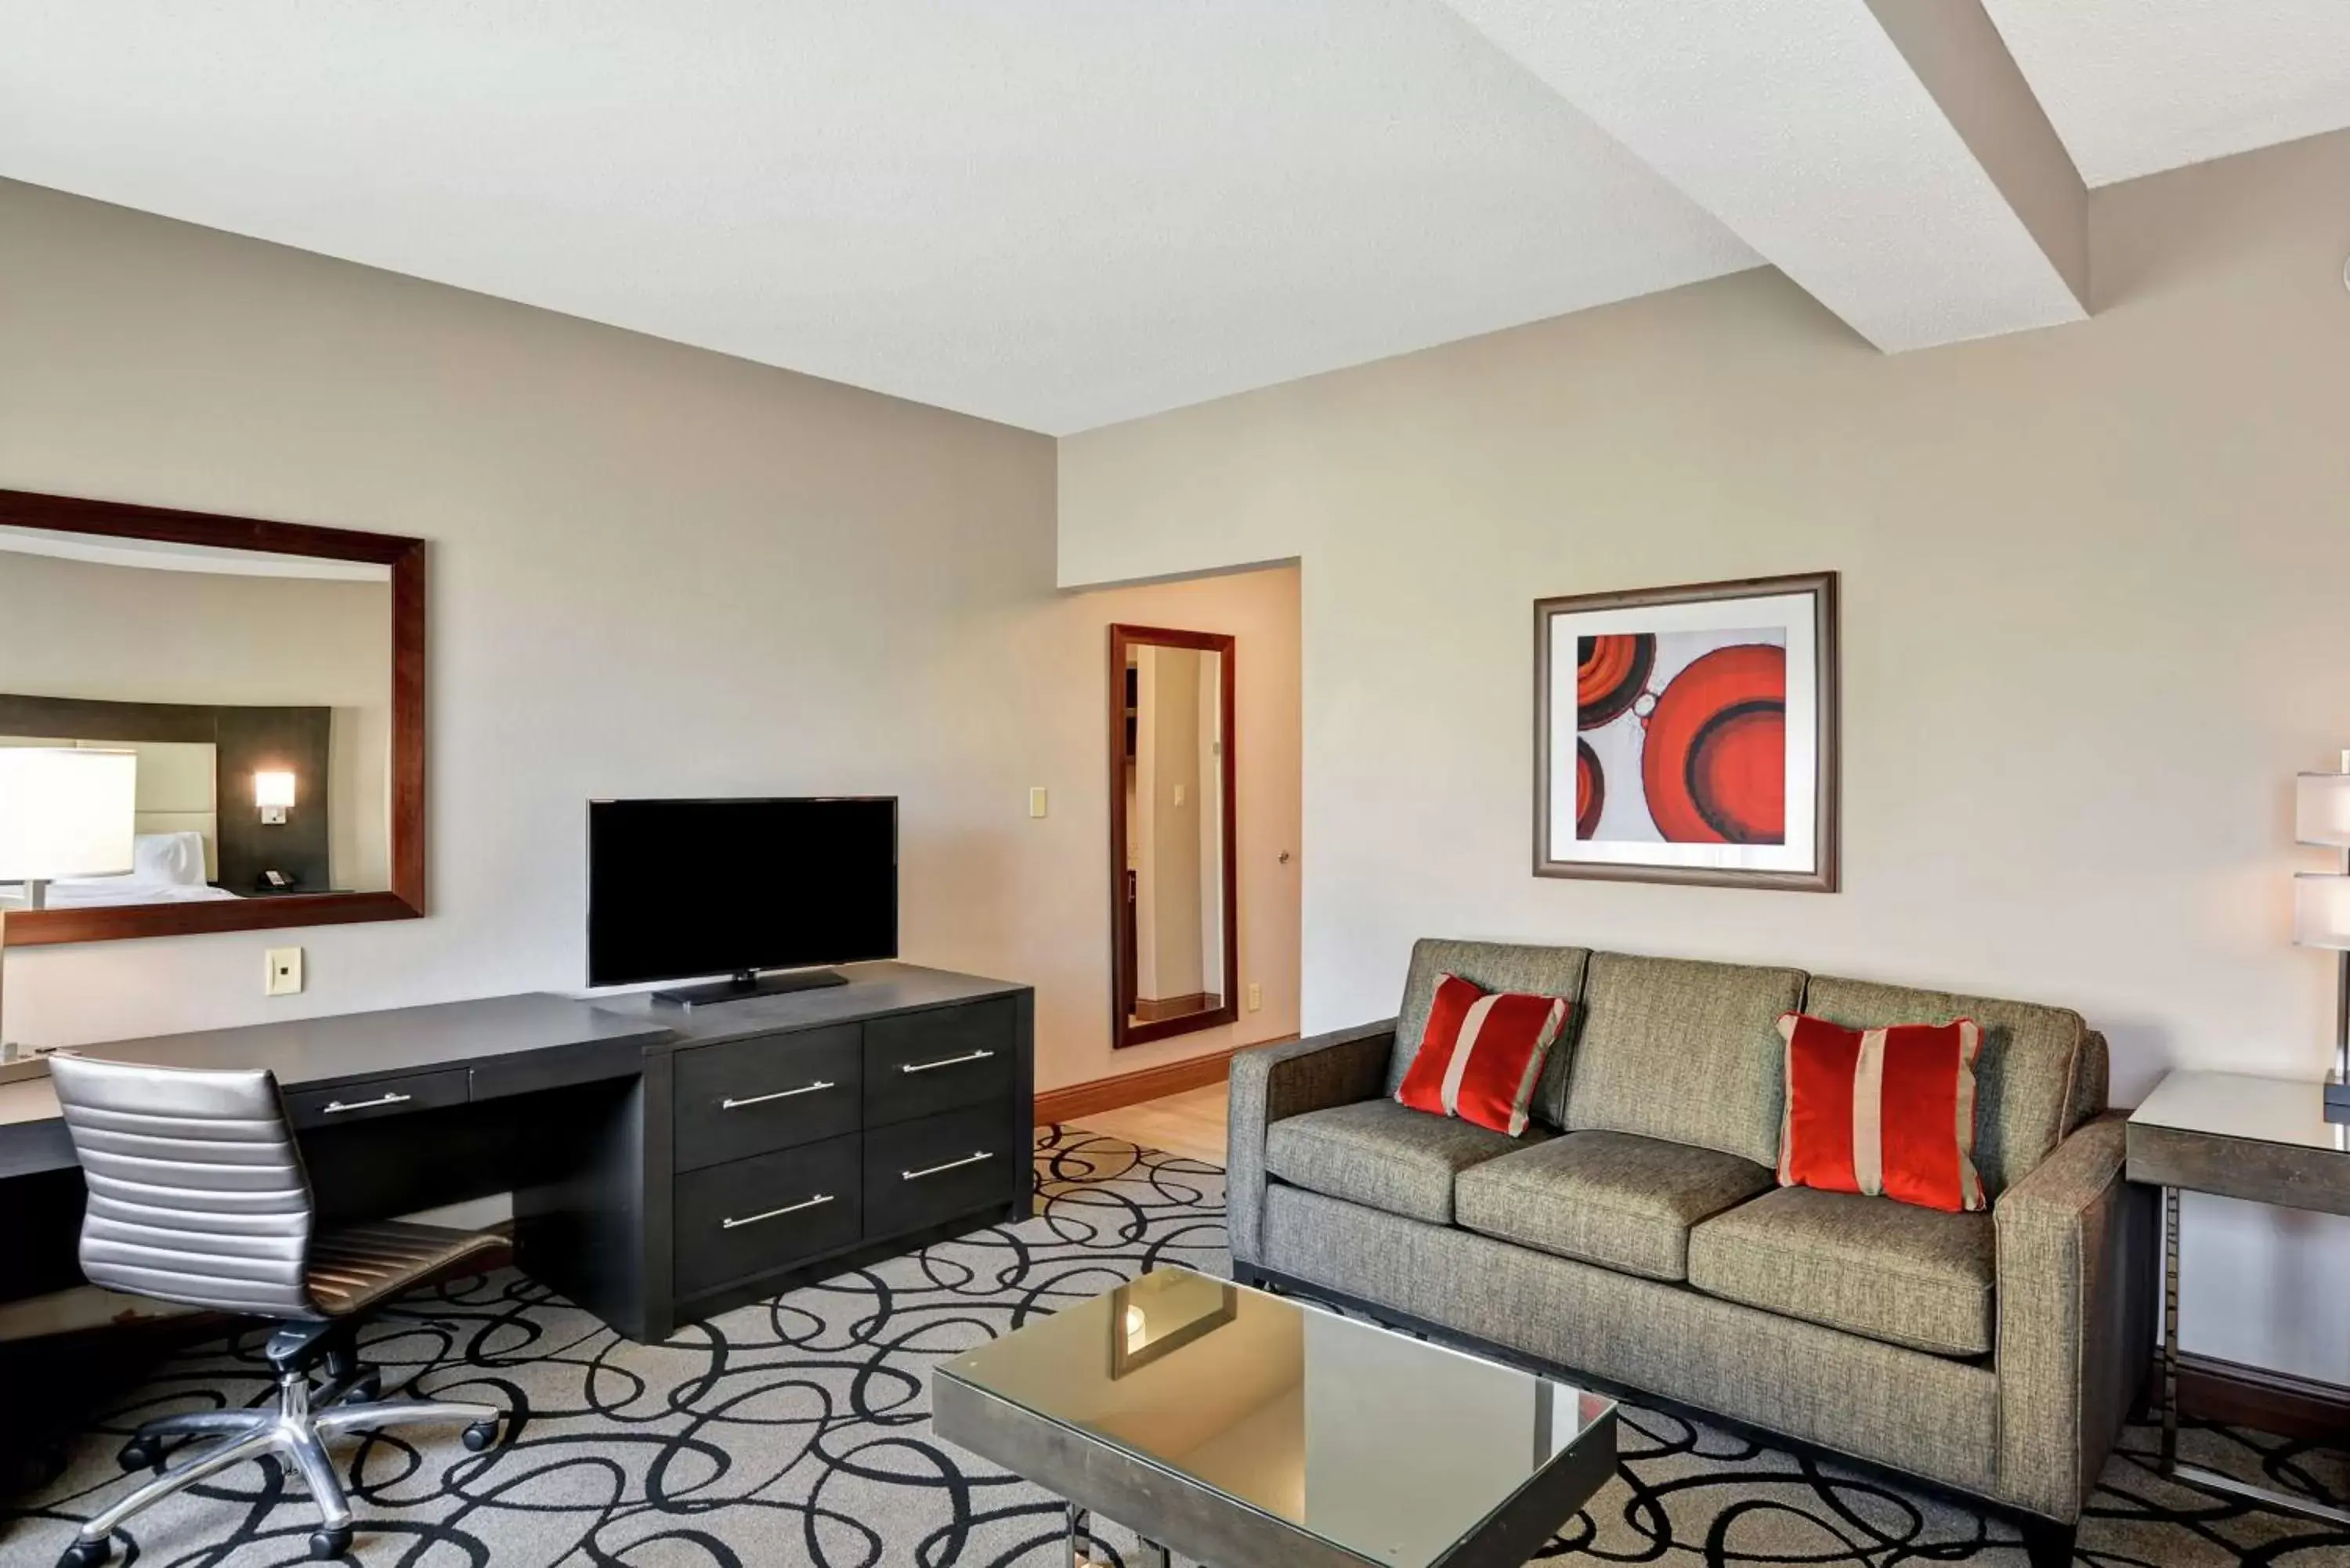 Bedroom, Seating Area in DoubleTree by Hilton Hattiesburg, MS